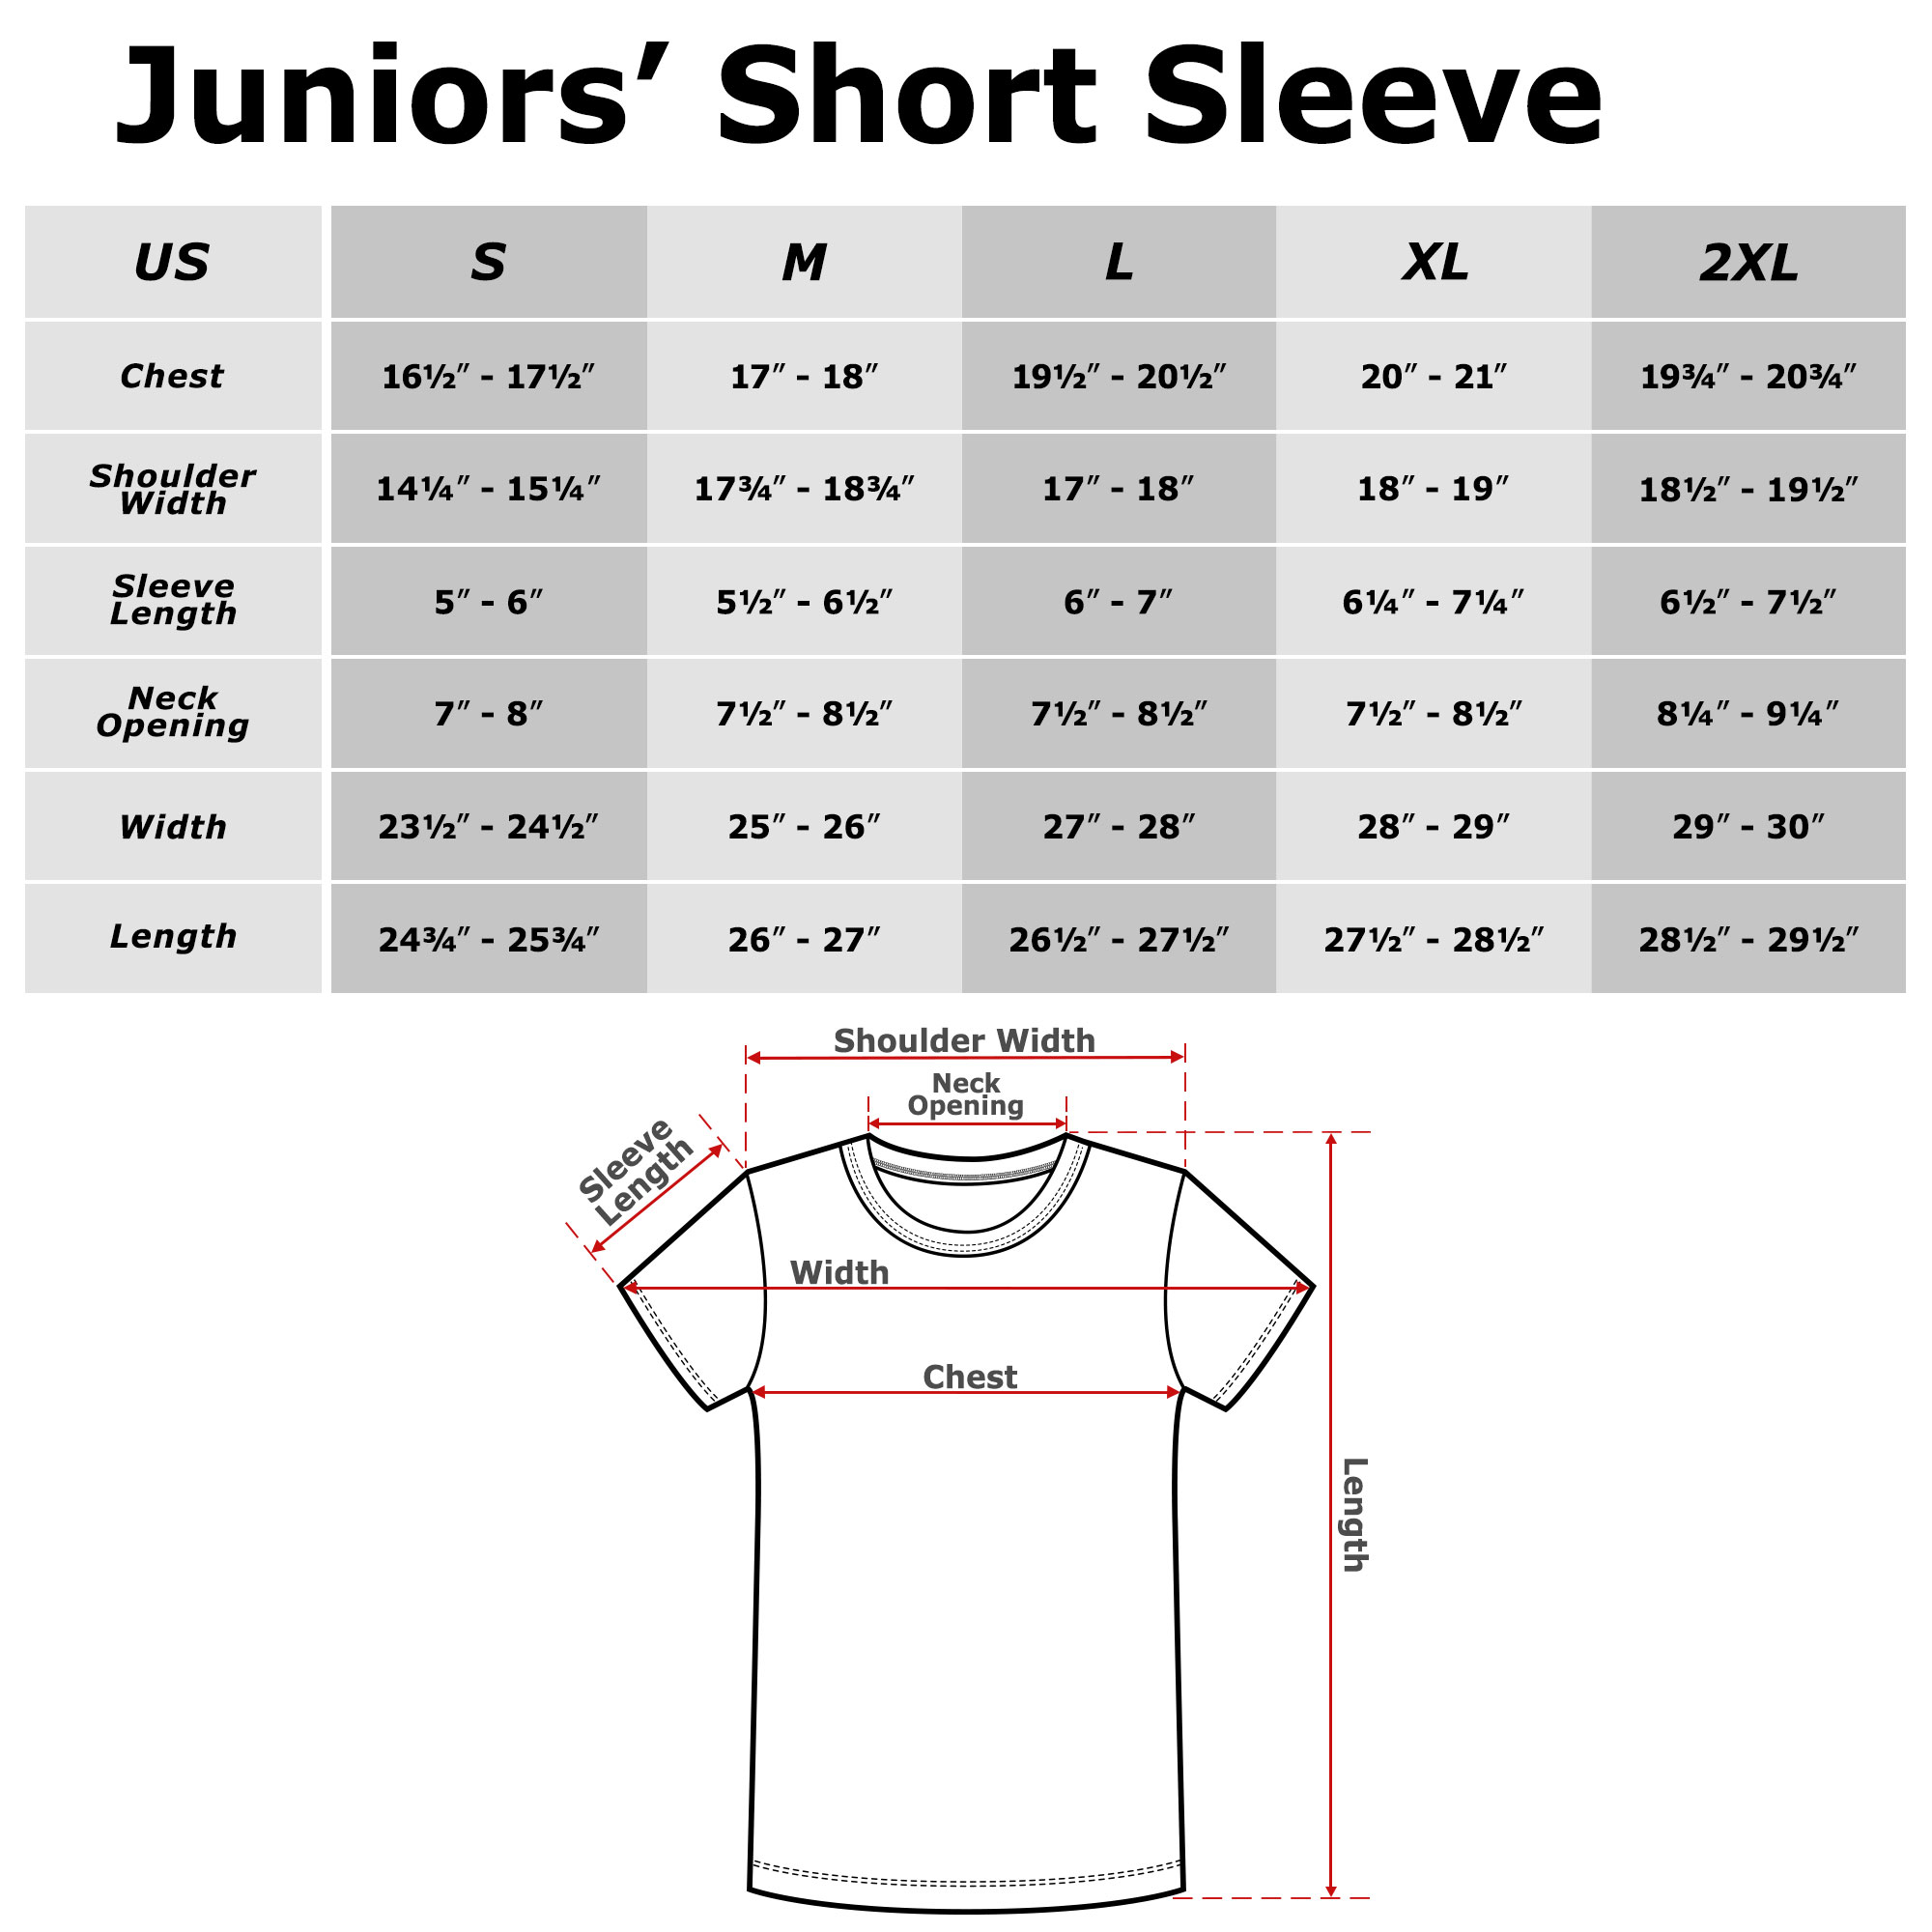 Nintendo Junior's Nintendo Bowser Jr. Costume  Graphic T-Shirt